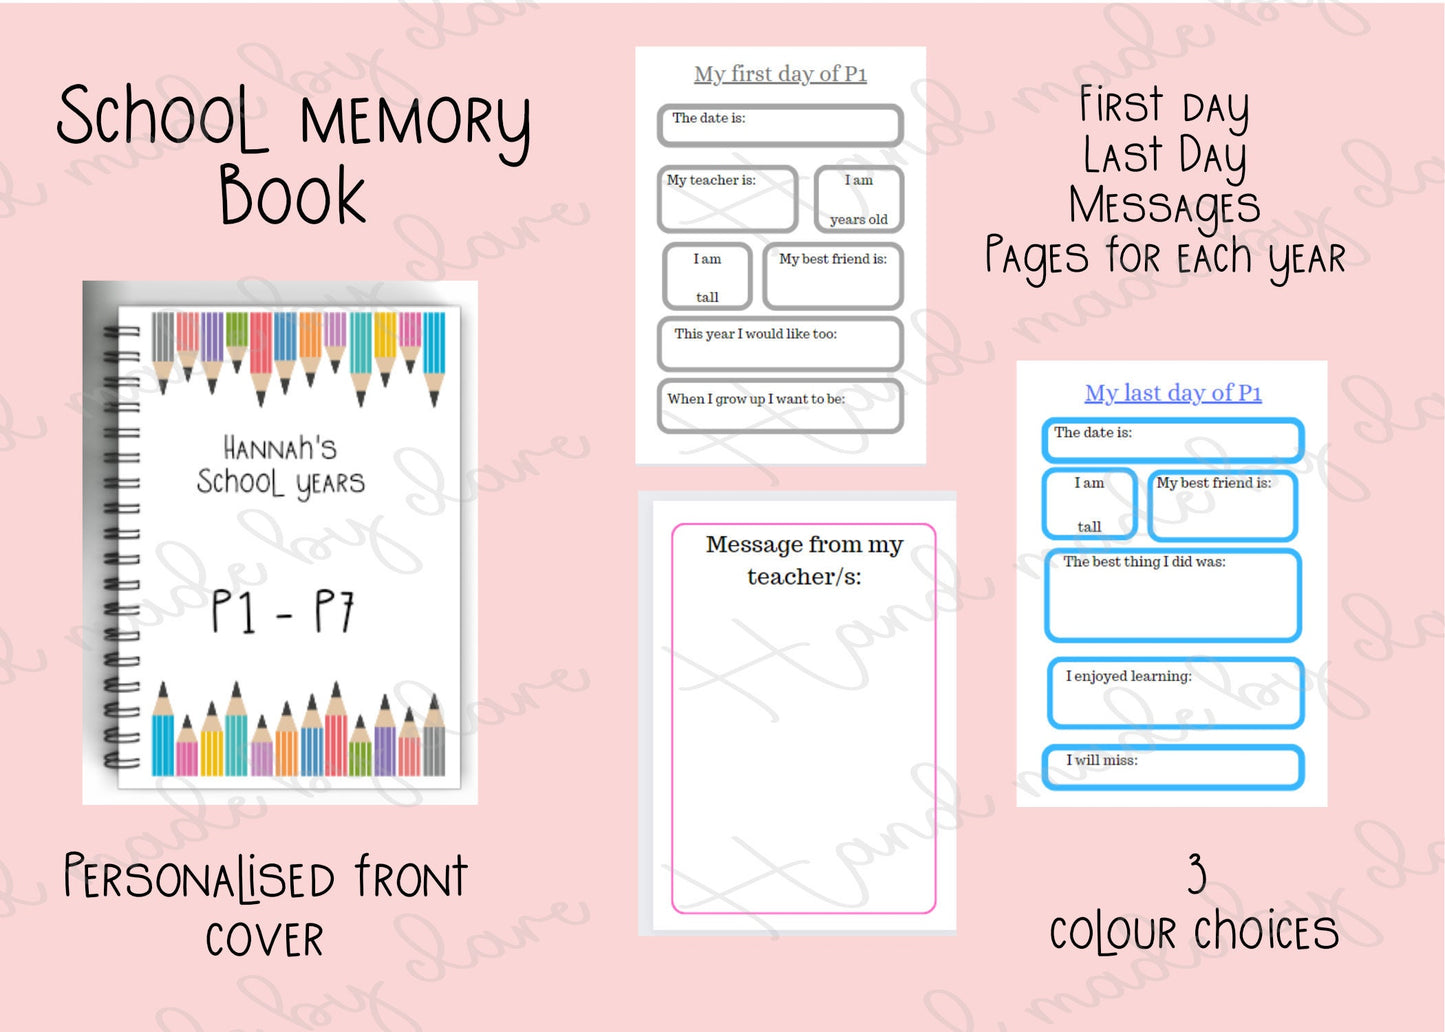 Personalised school memories book | Scottish Primary Years | school journal | memory book | notebook | journaling | First day of school